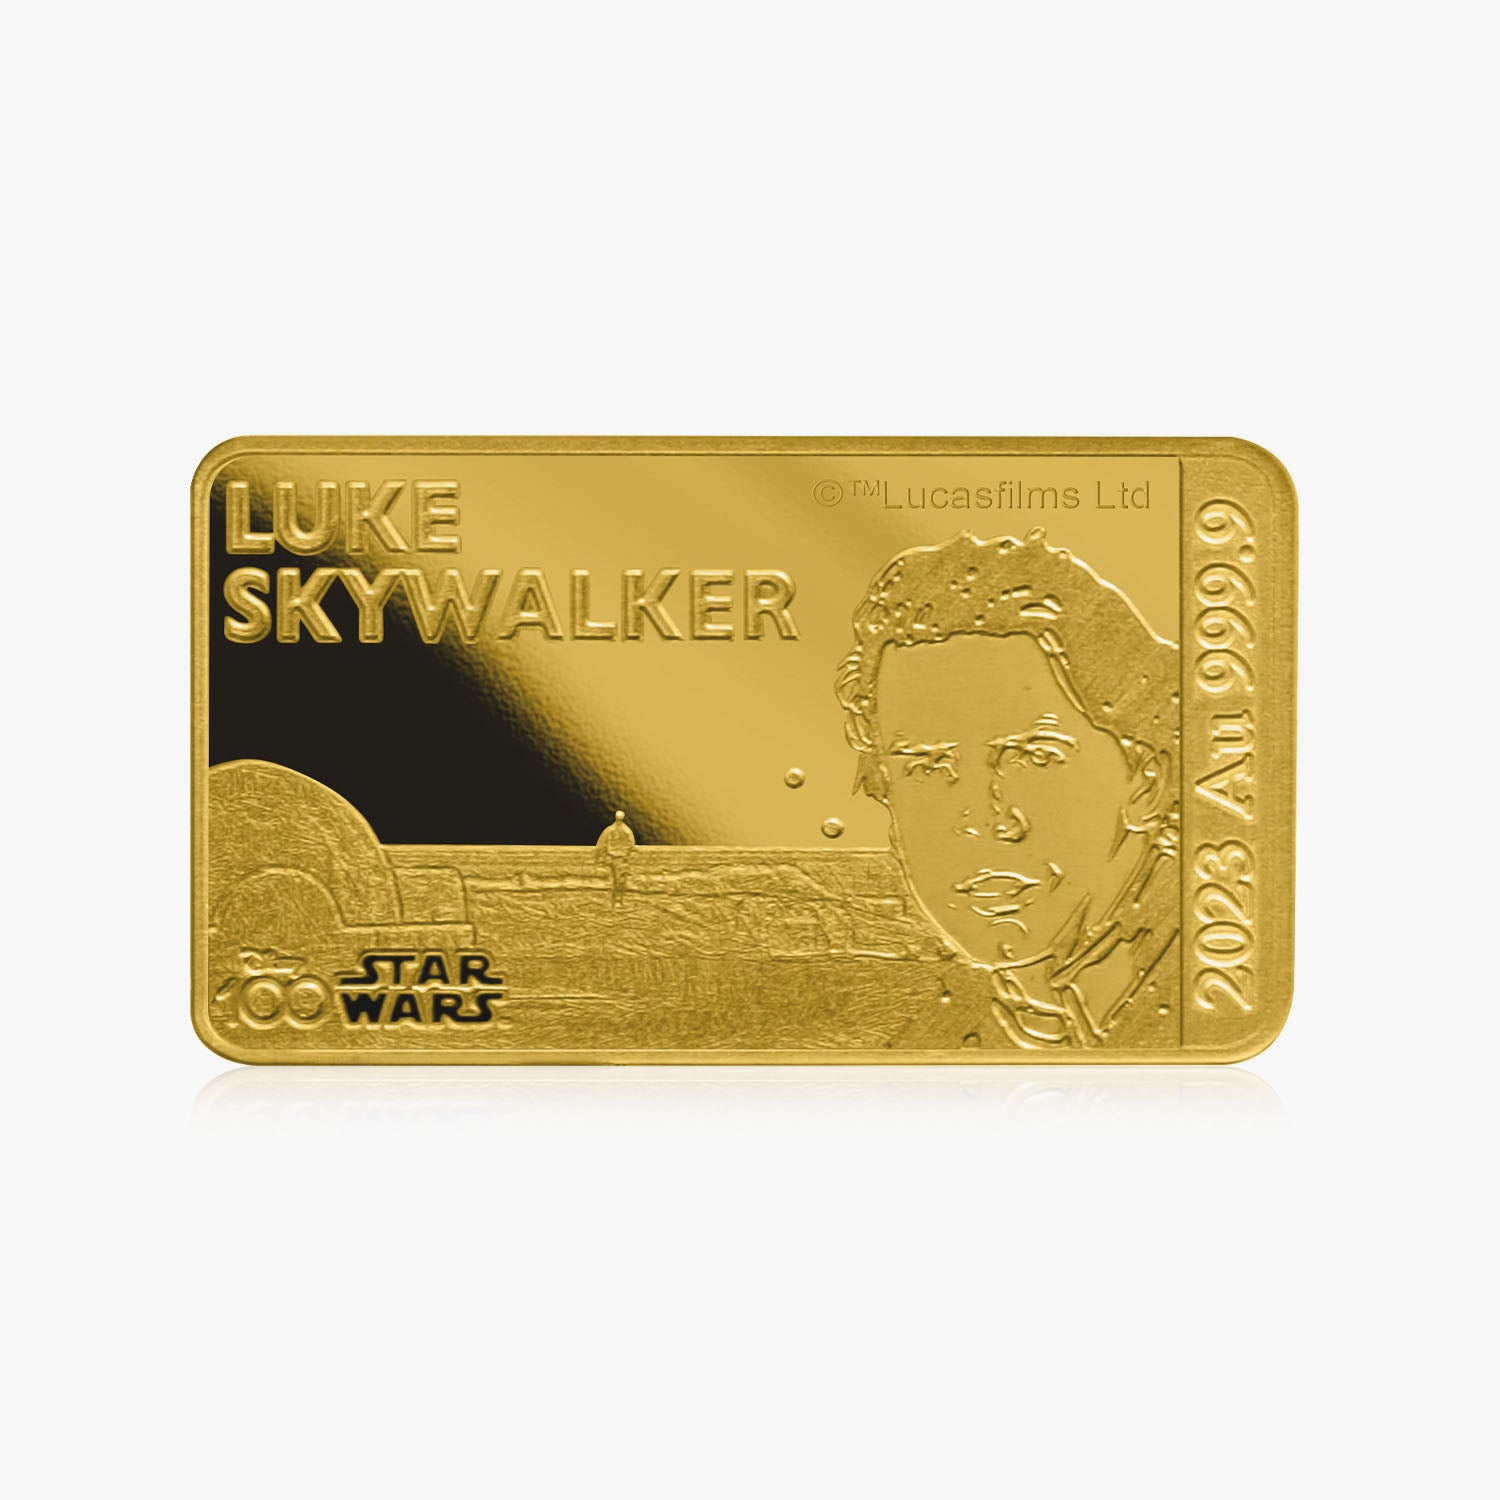 Star Wars Luke Skywalker Solid Gold Bar